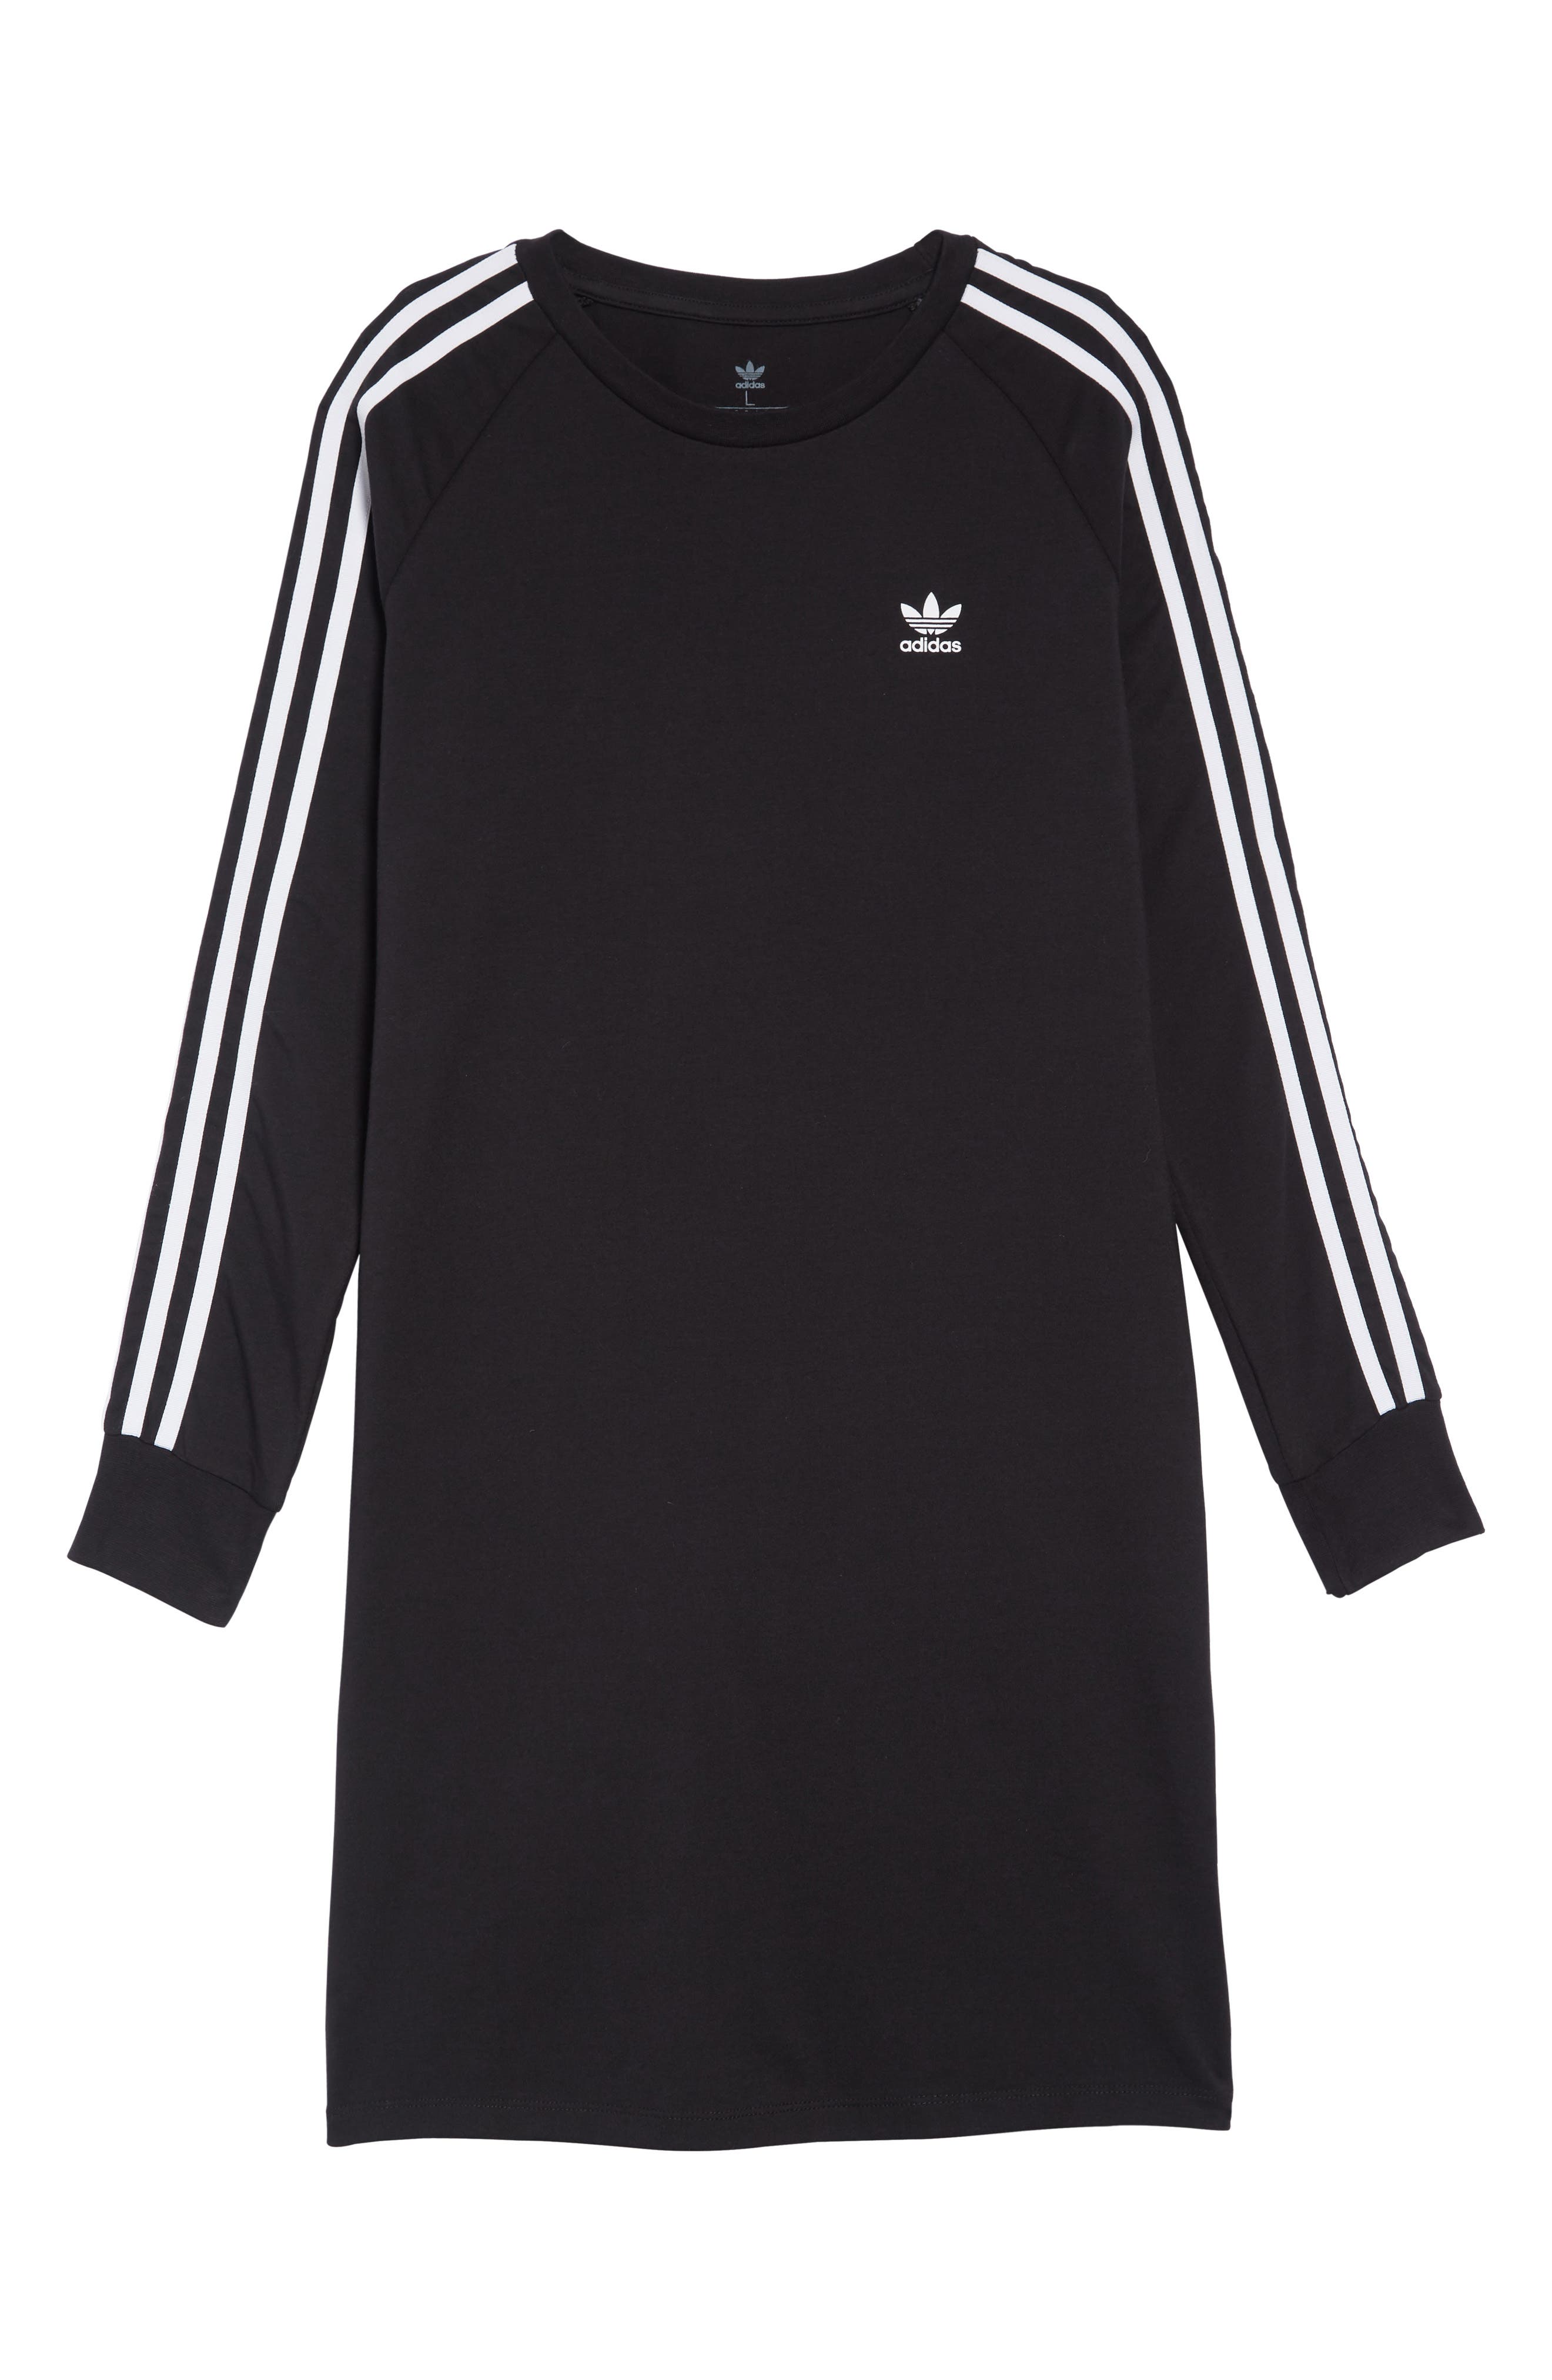 Girls' Adidas Originals Clothing (Sizes 